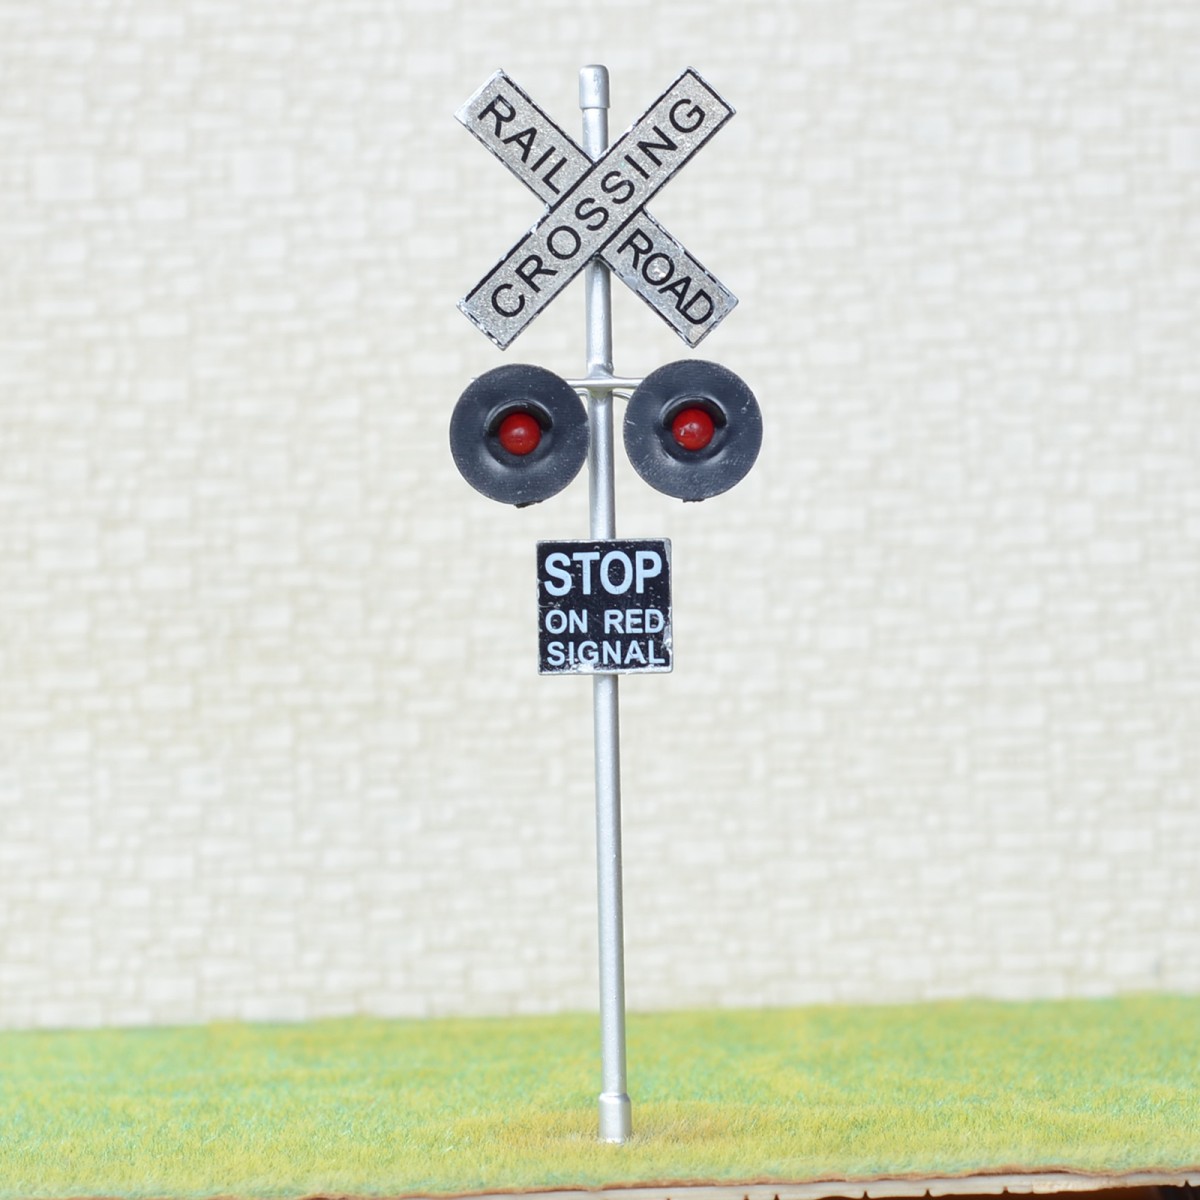 2 x O Scale Railroad Crossing Signals 2 LED heads + Circuit board flasher #48SL2 